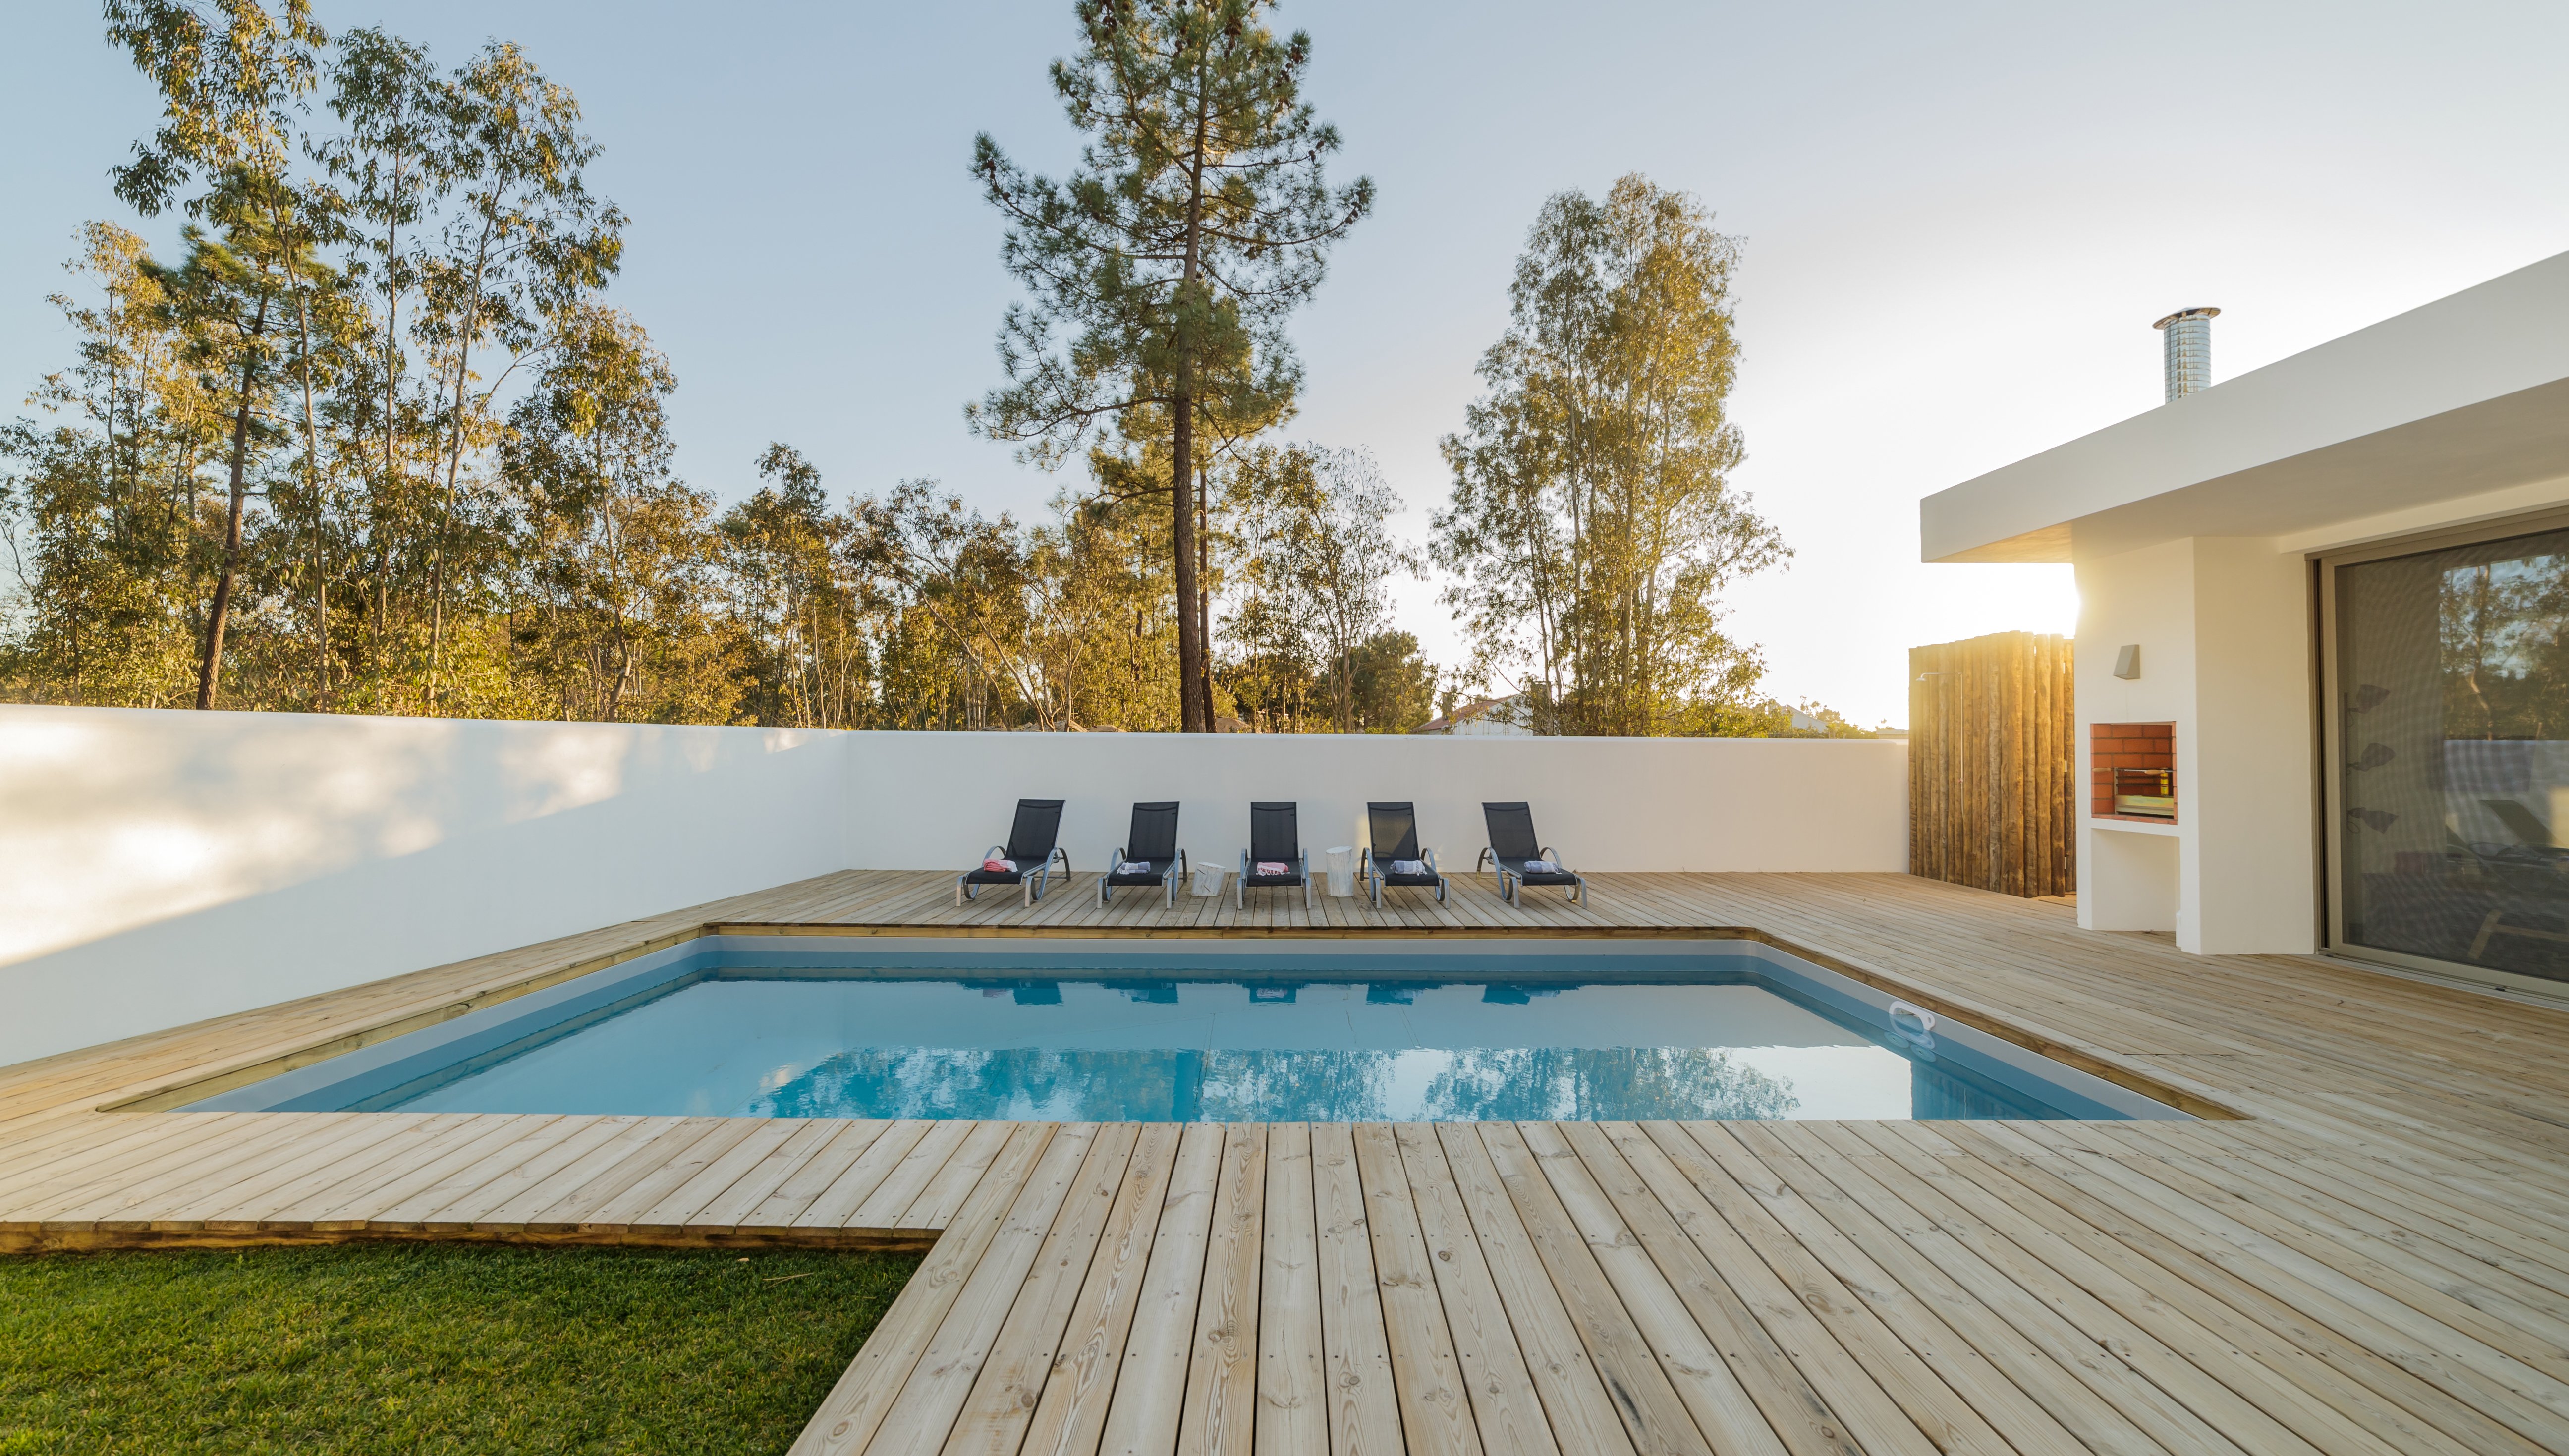 Inground Swimming Pools Cost, Wood Deck Around Pool Ideas